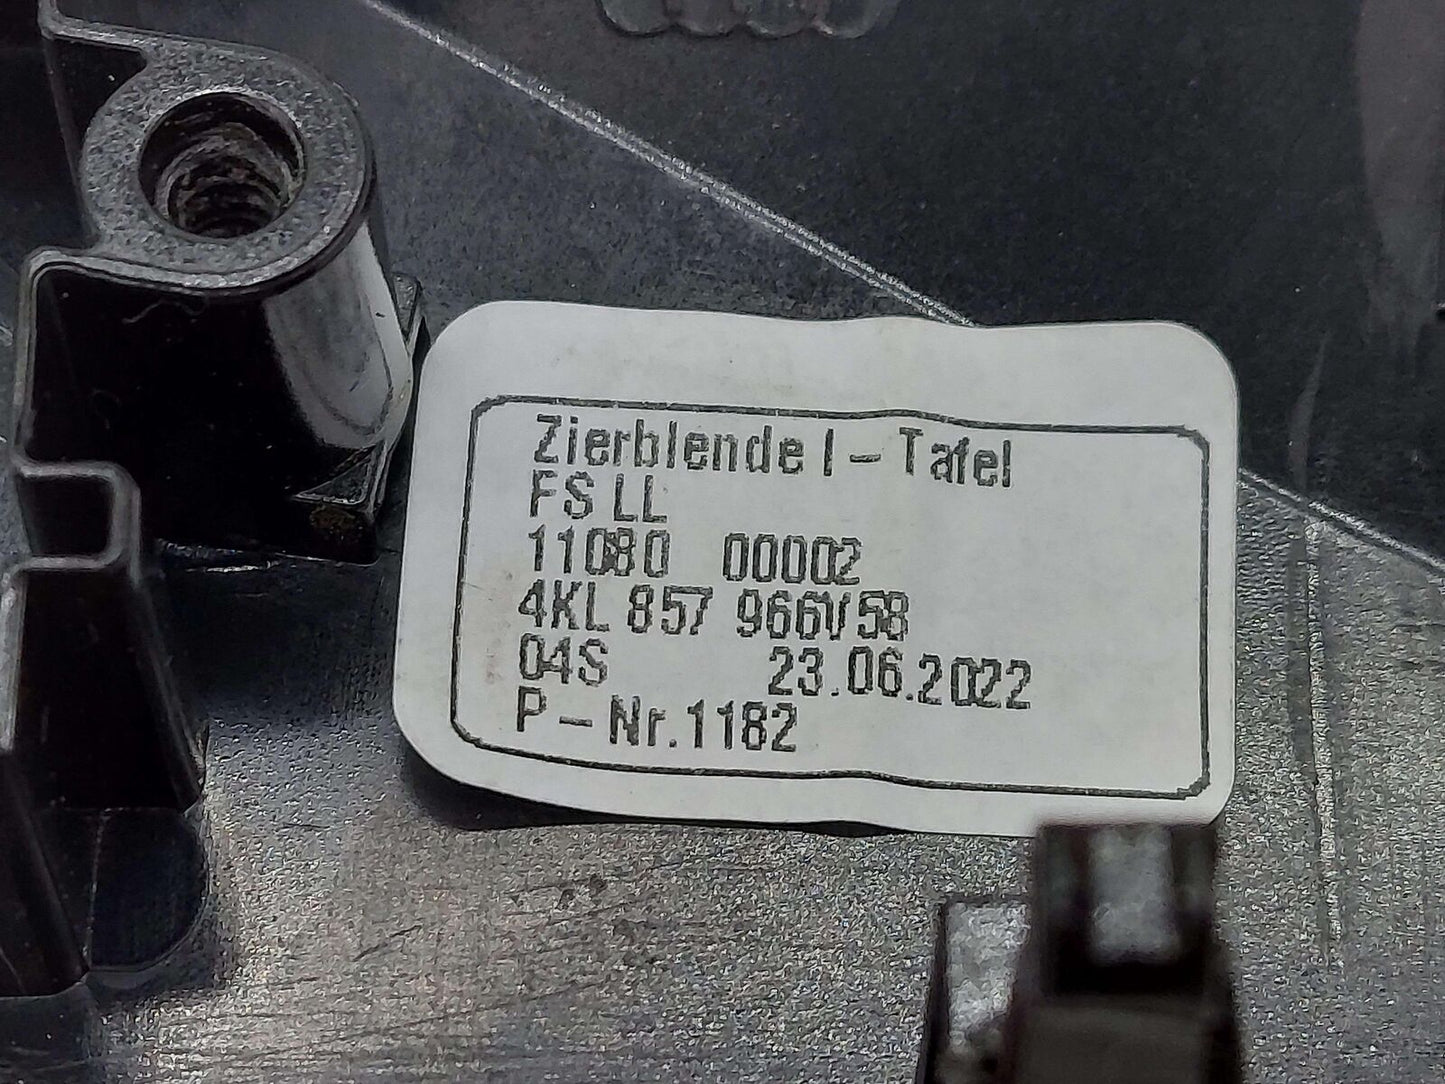 2023 Audi Q8 E-tron Quattro Light Switch Trim Cover Gloss Black 4KL857966